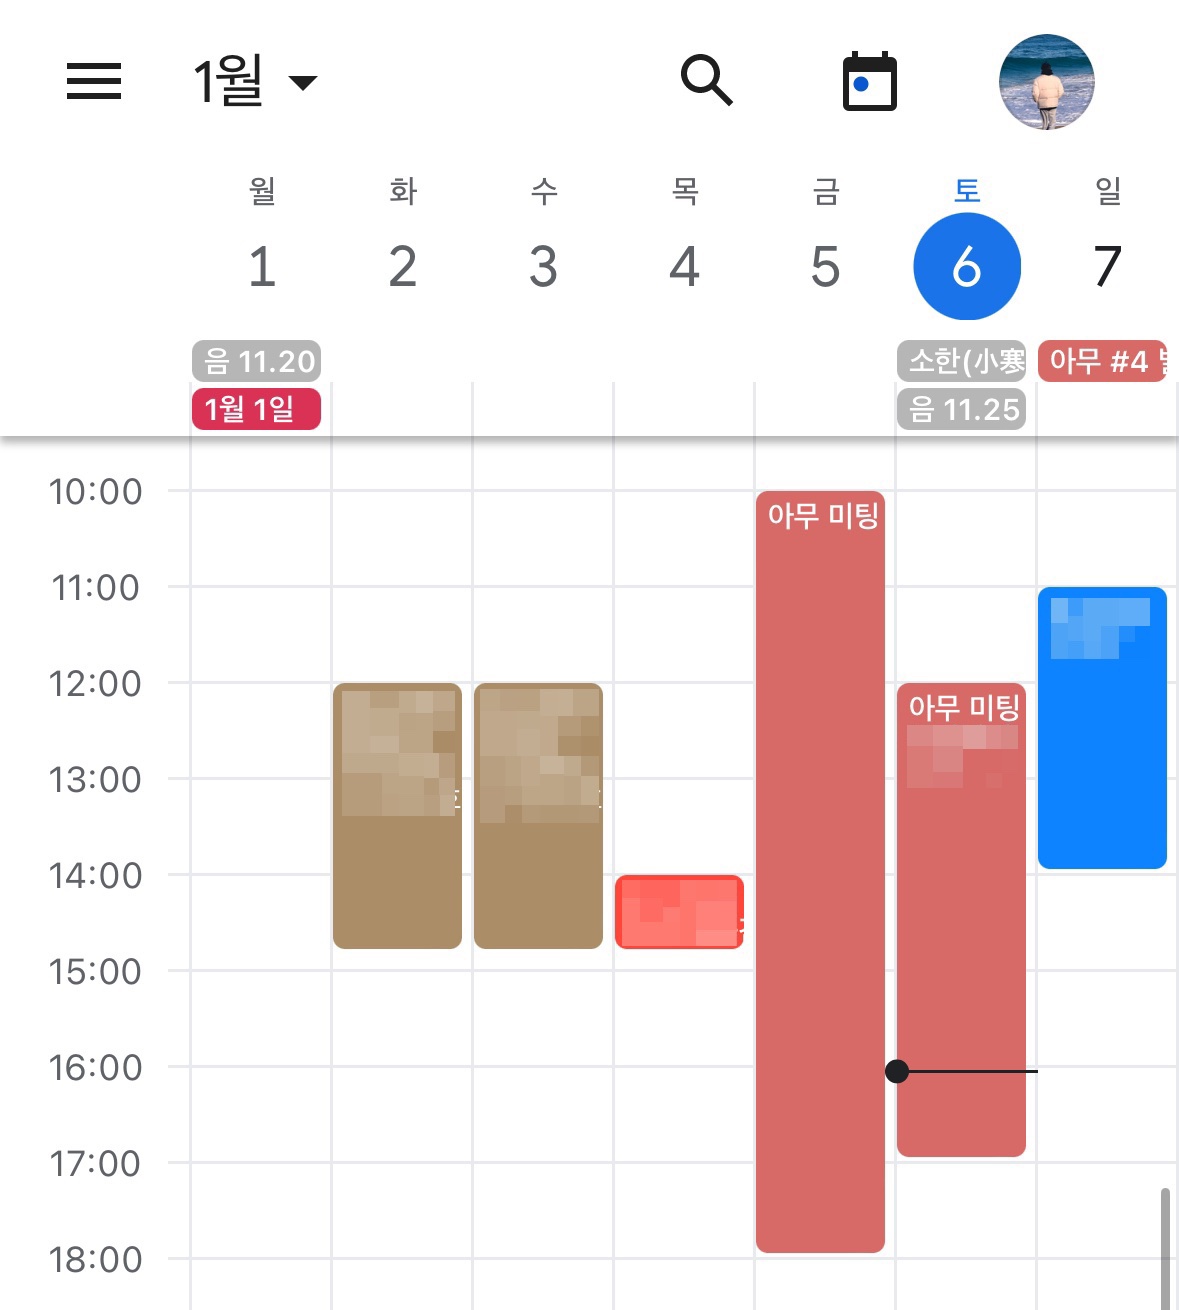 Google 캘린더 iOS 앱 스크린샷. 여러 색상으로 된 캘린더의 이벤트들이 등록되어 있음